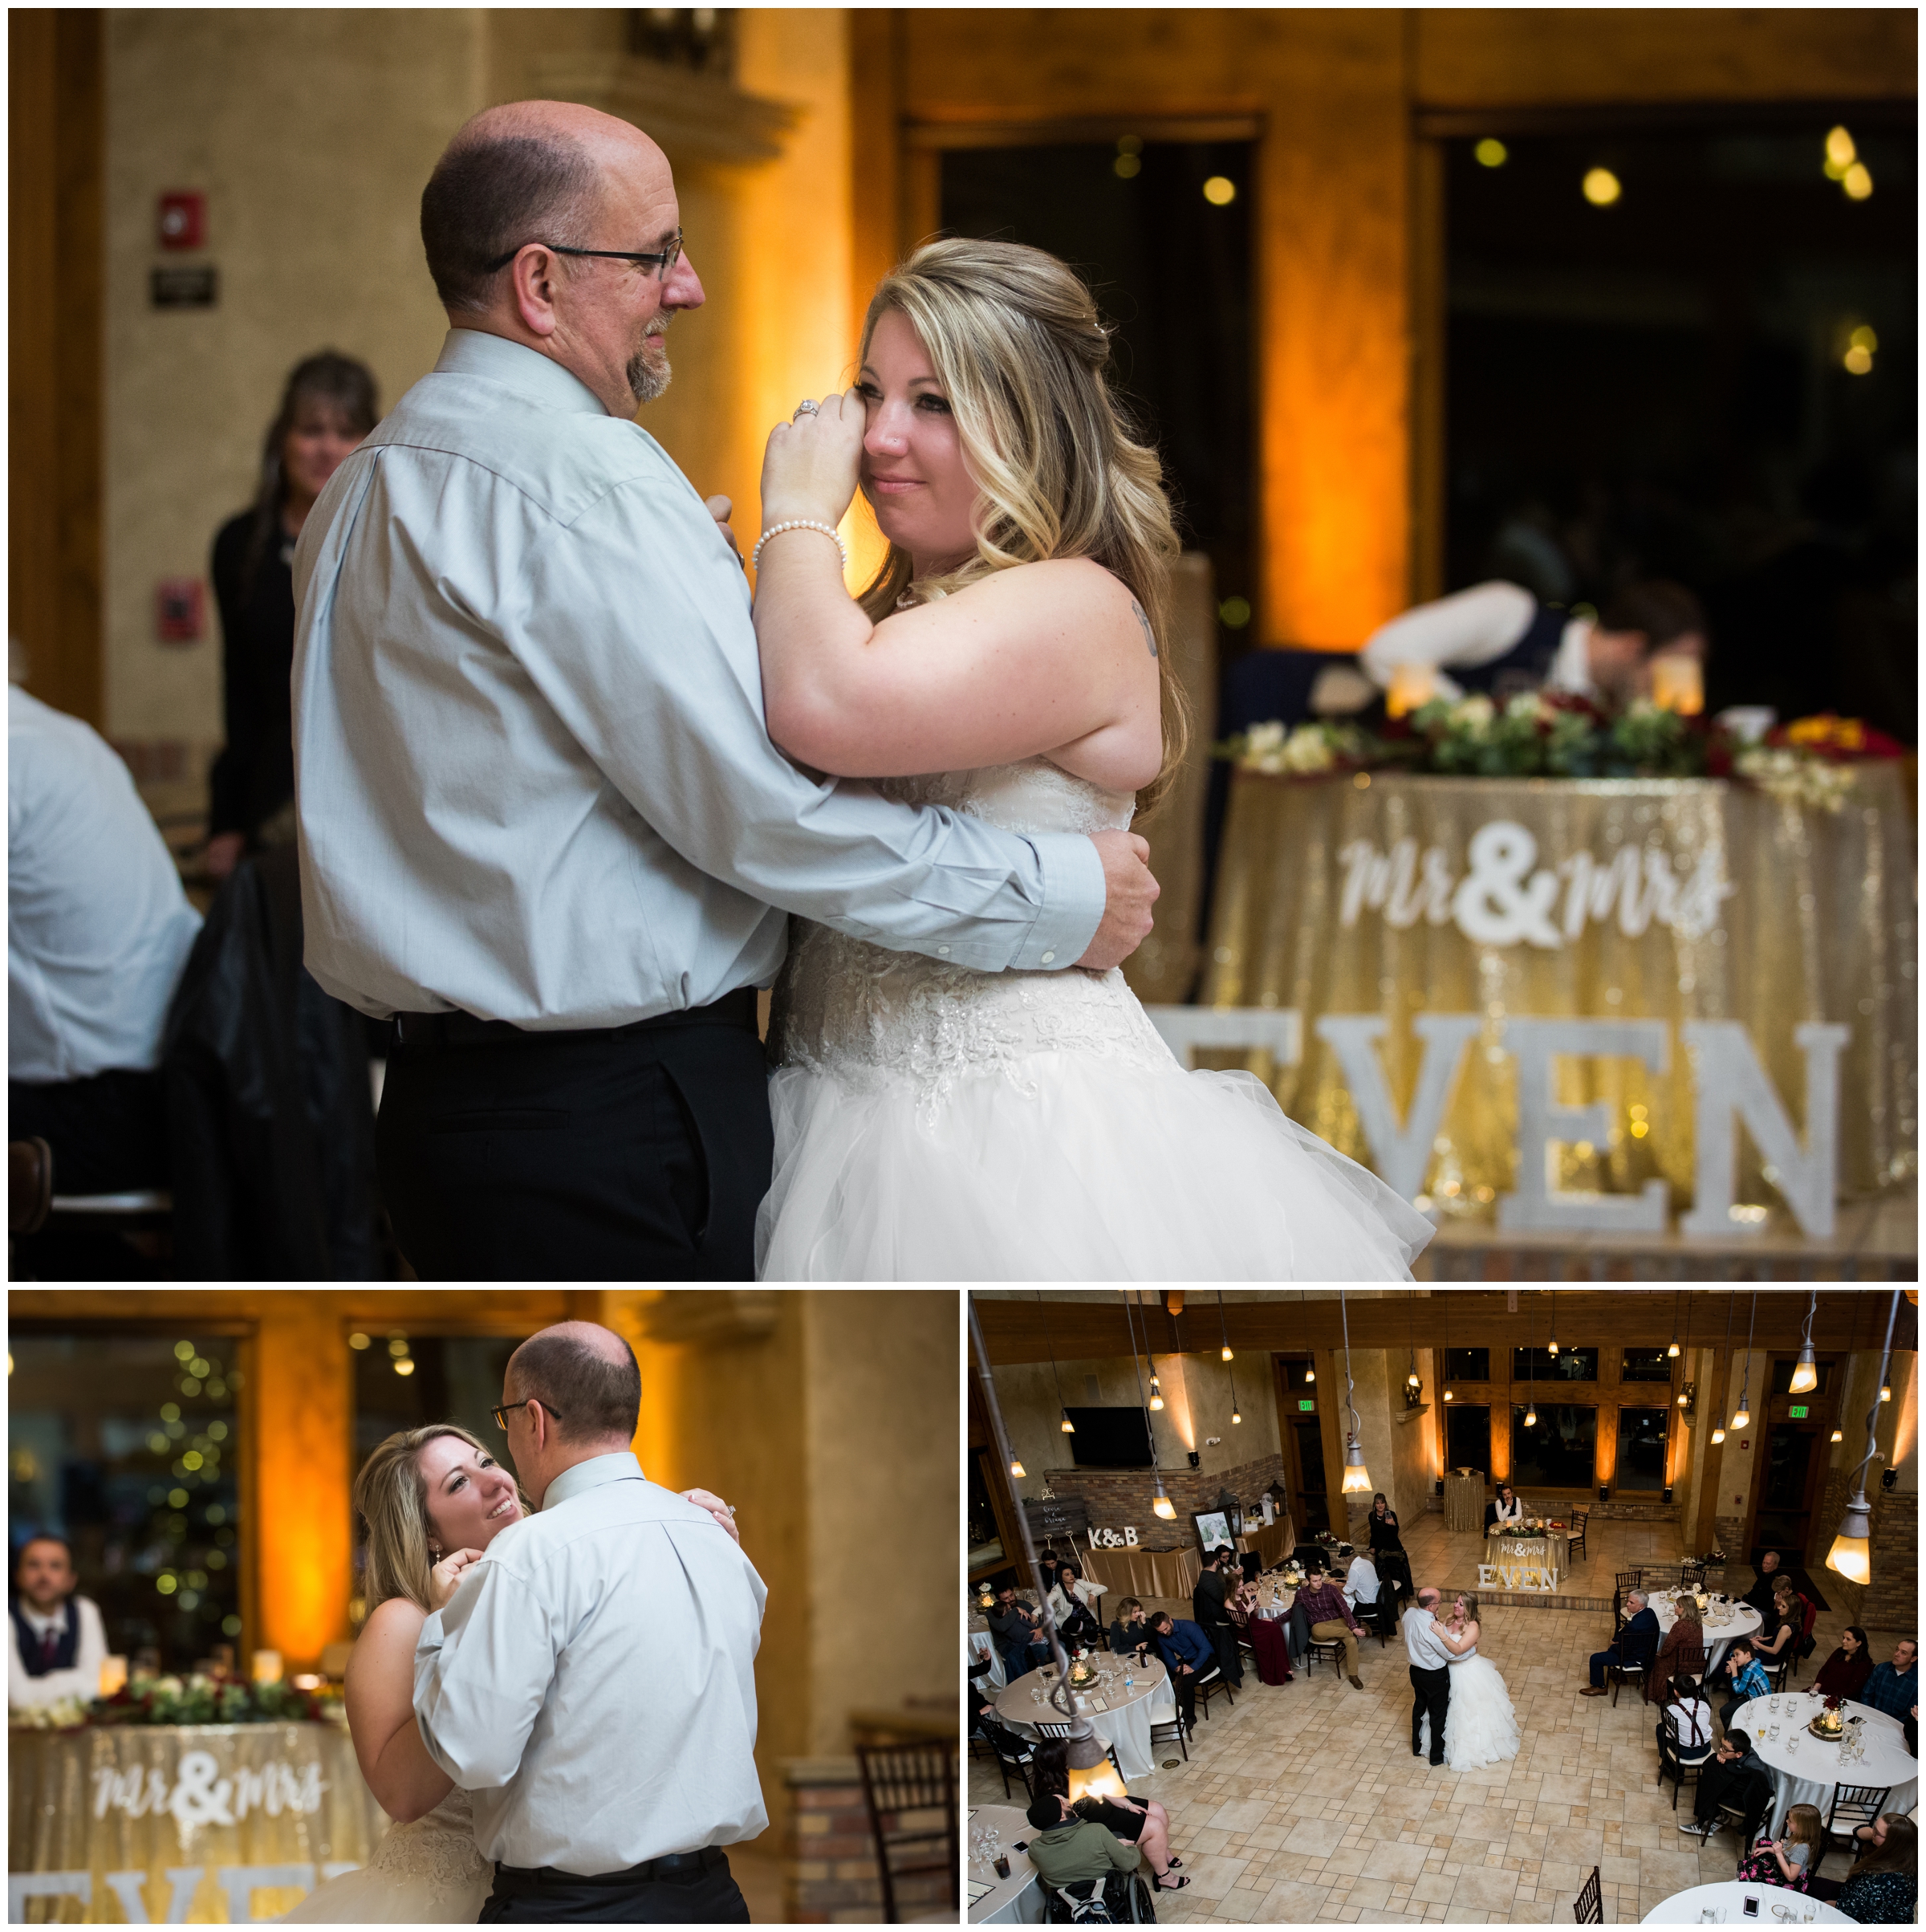 emotional father-daughter dance at Colorado winter wedding reception 